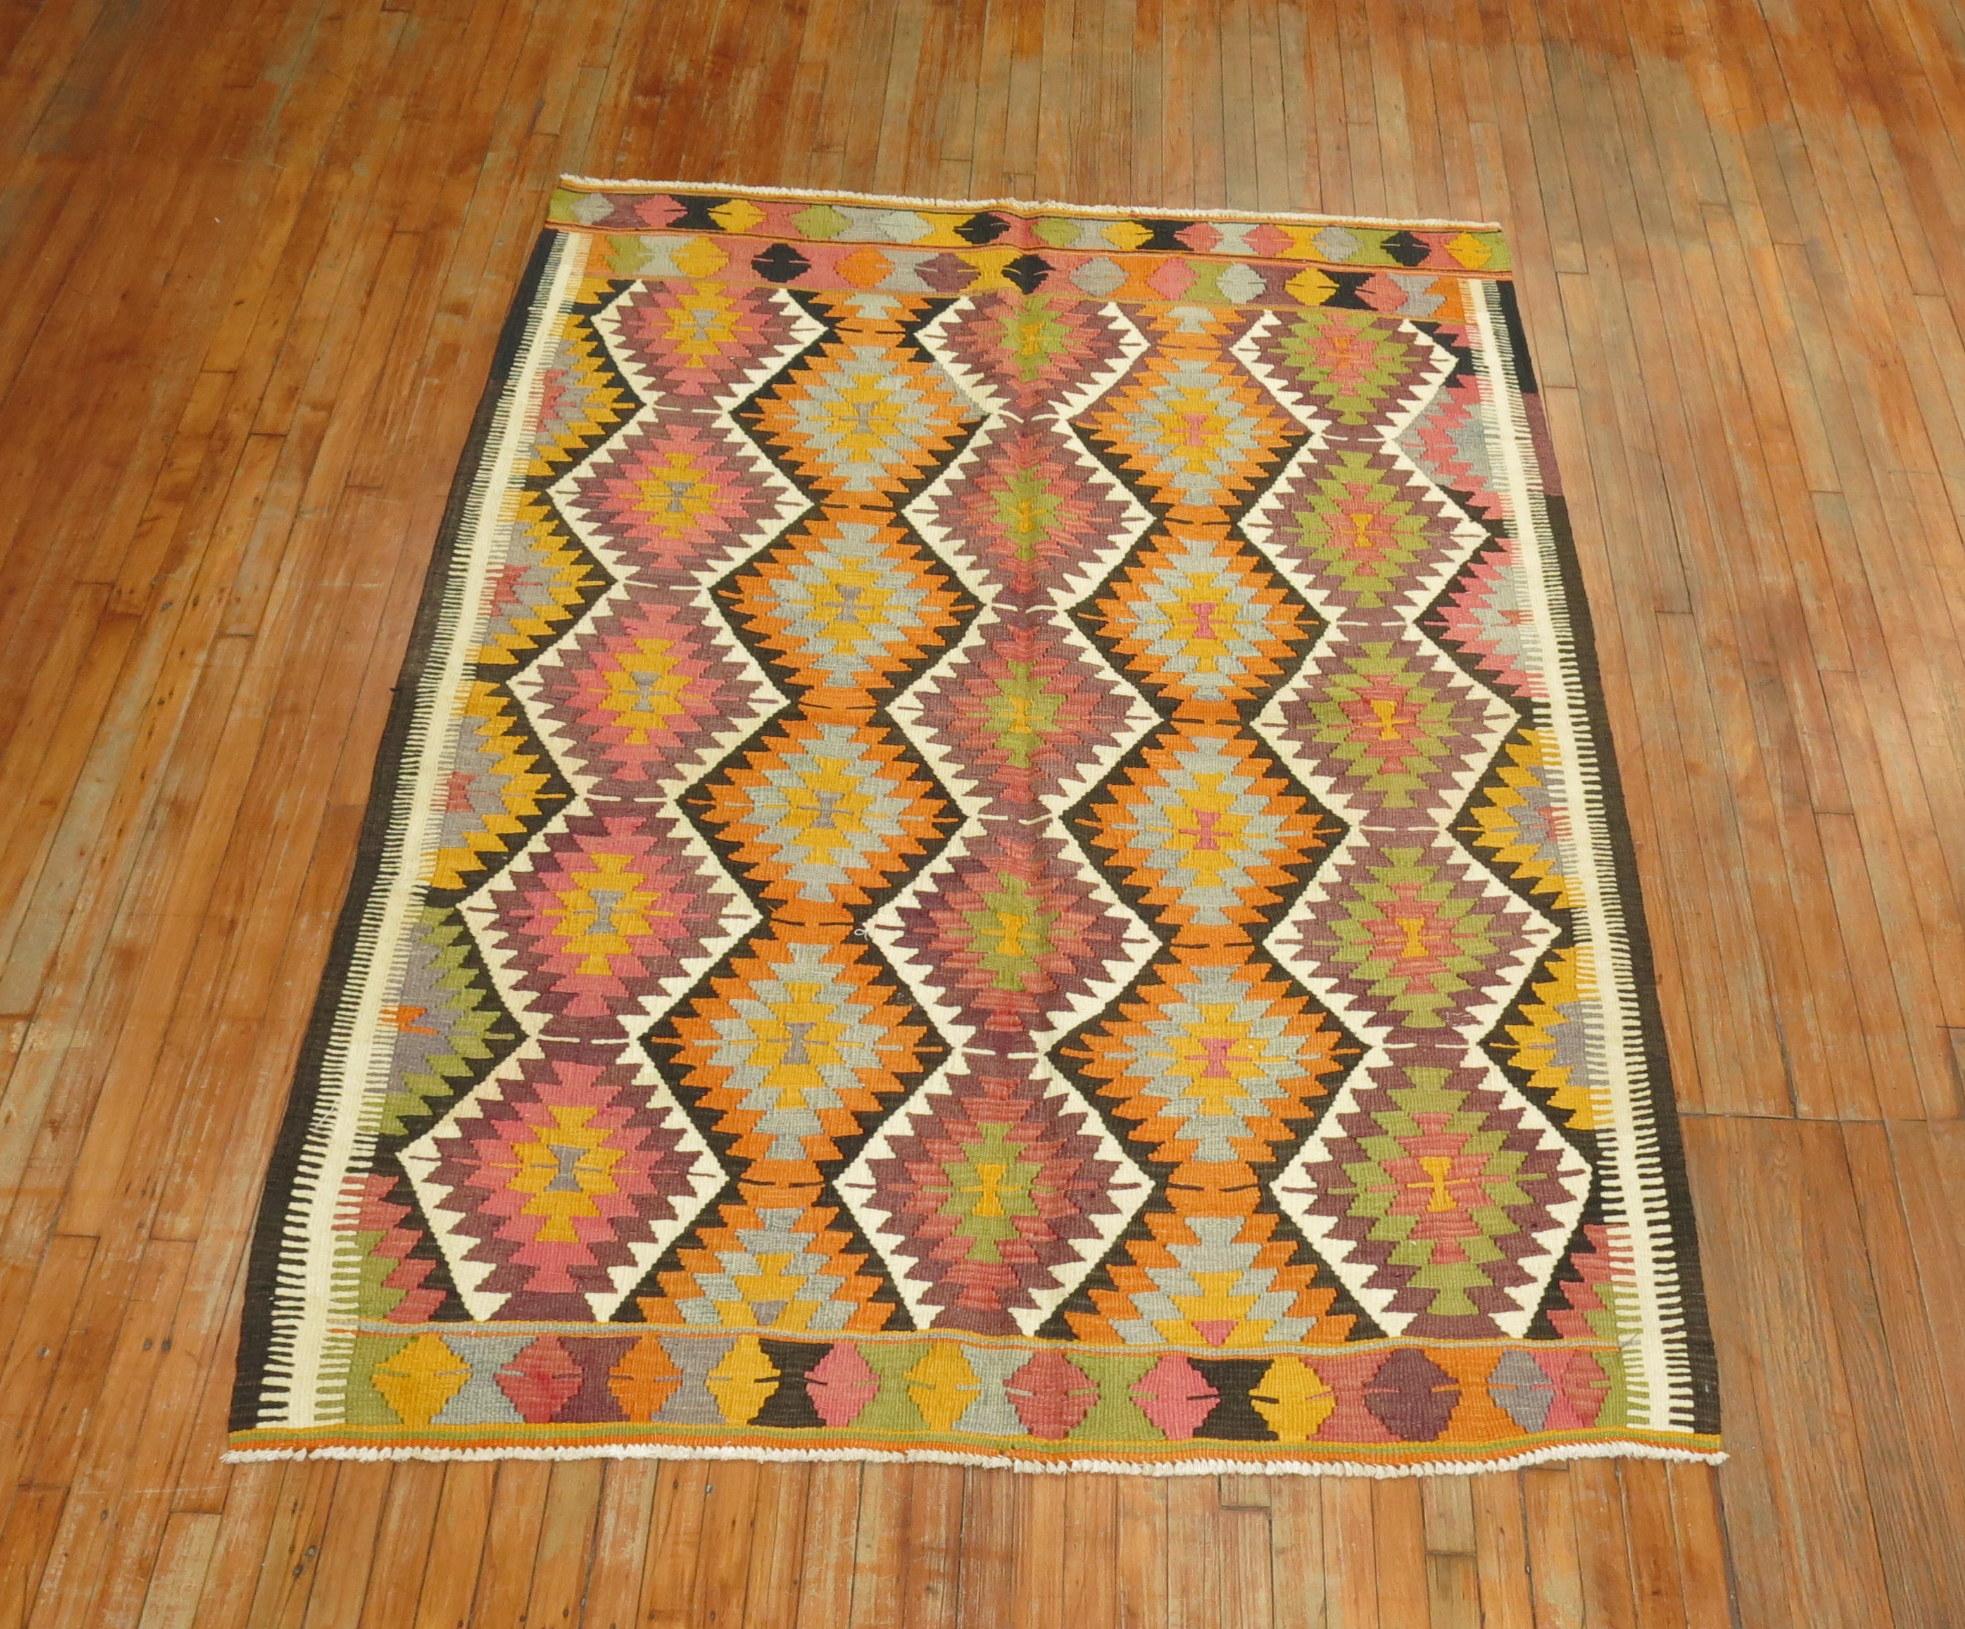 Intermediate size mid-20th century geometric Kilim flat-weave.

Measures: 5'10